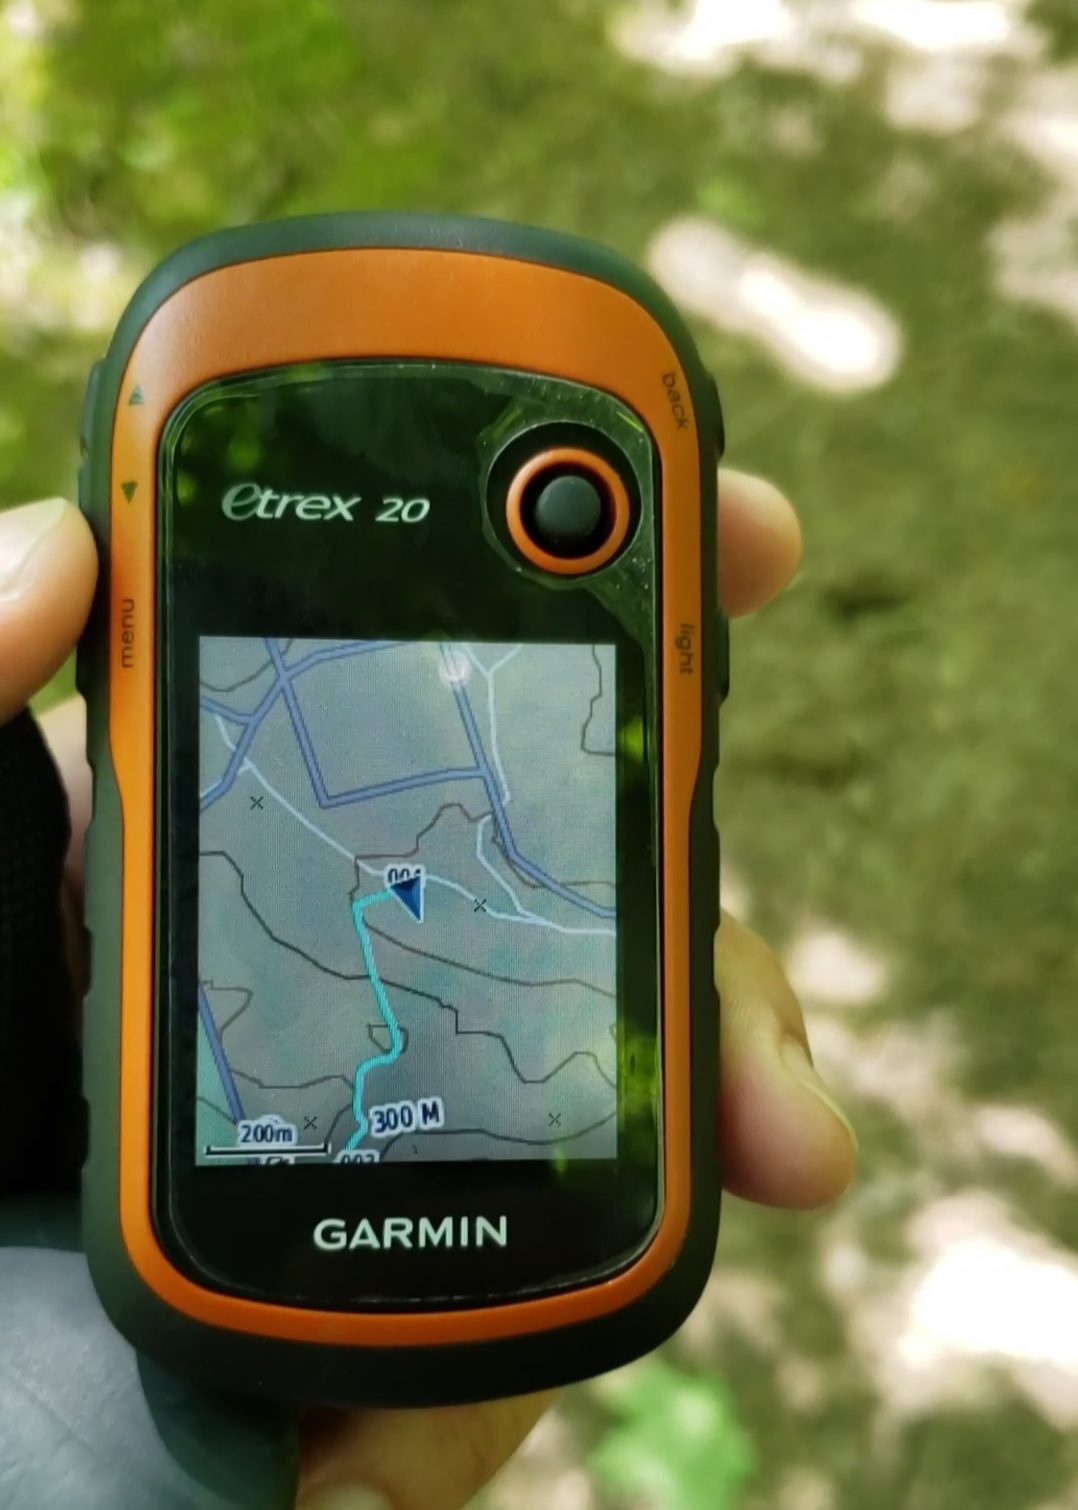 Canadian Tire] Garmin eTrex 20x Handheld GPS Clearance $159.93